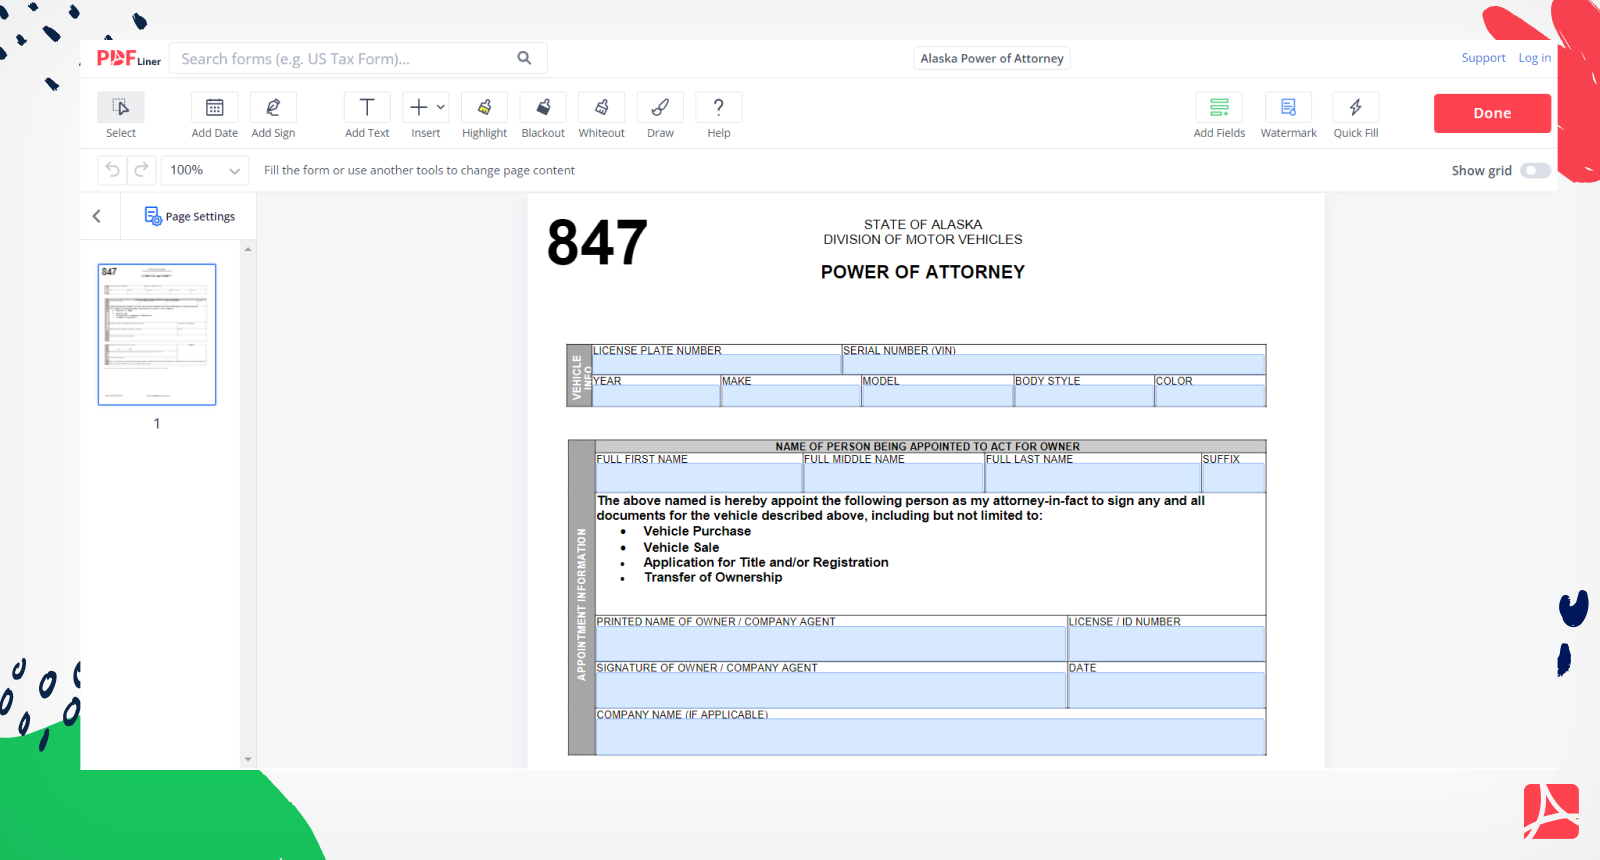 Alaska Power of Attorney Form Screenshot